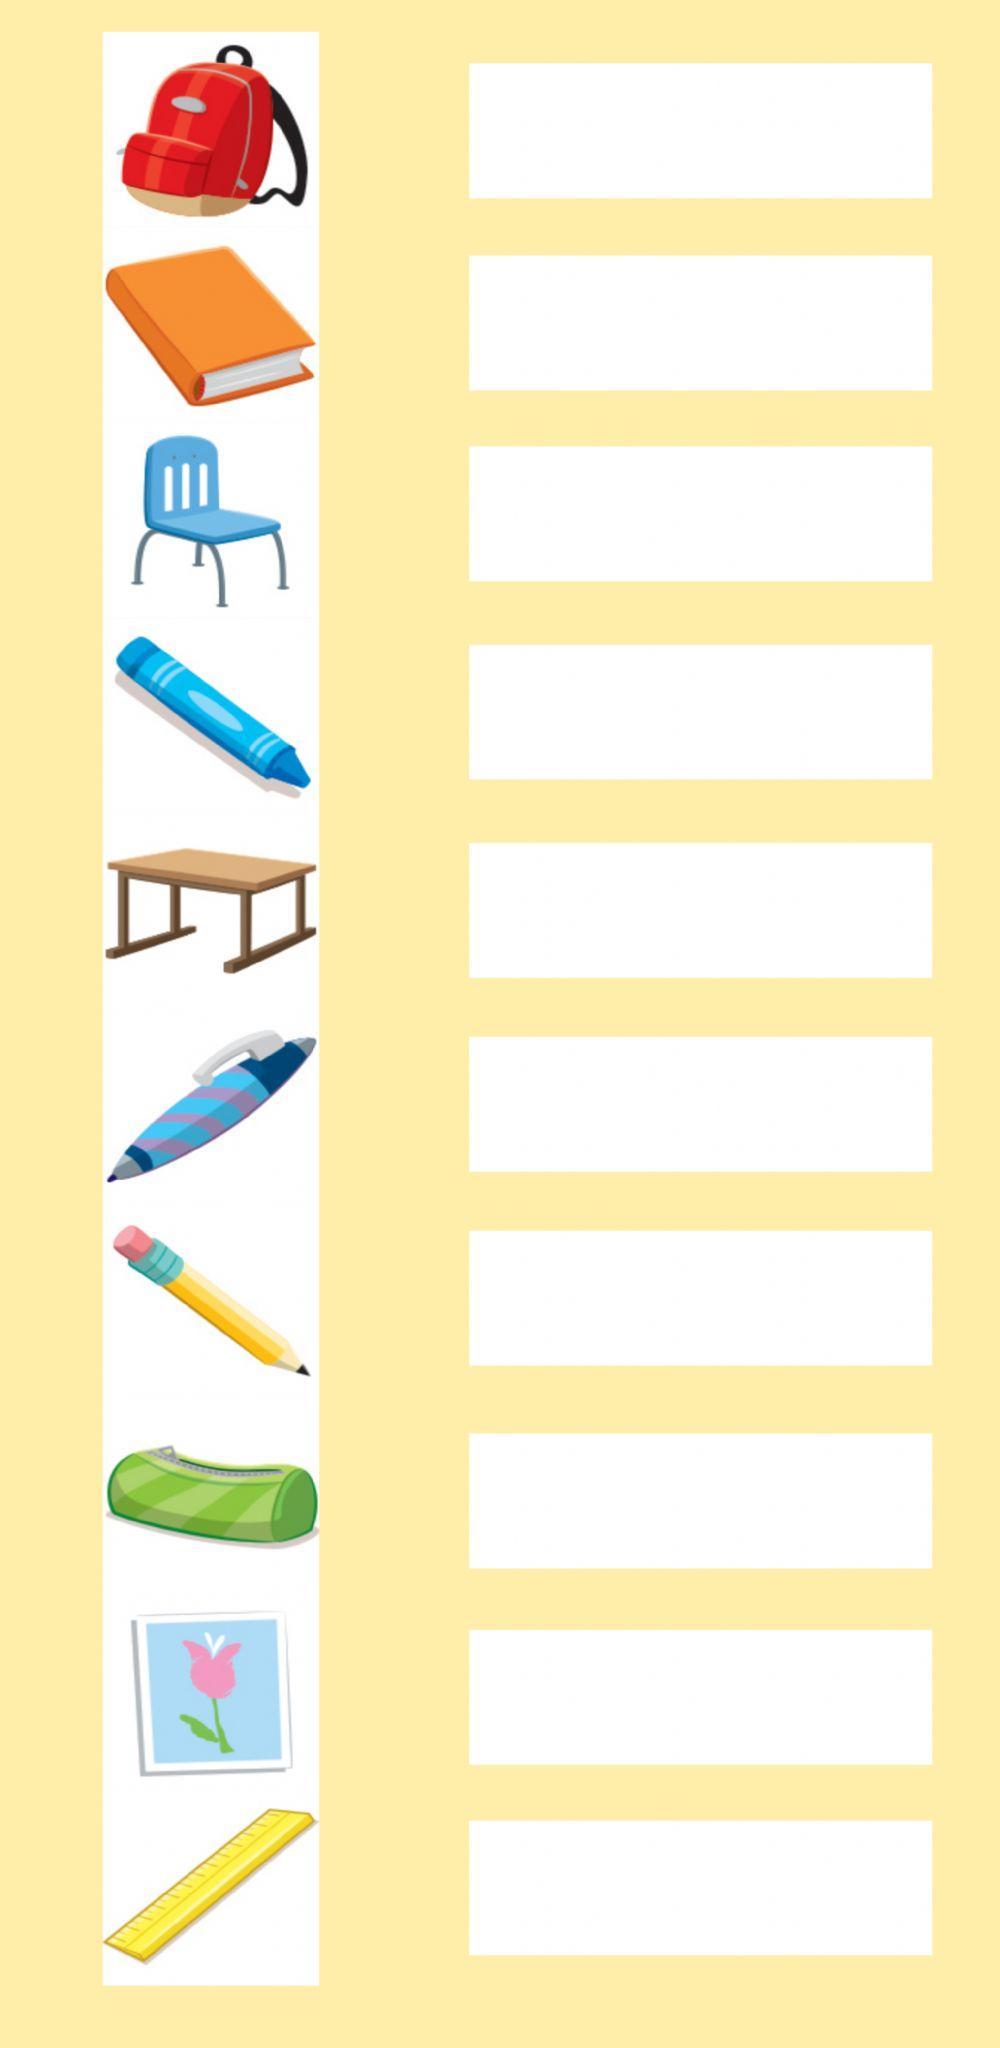 1st Grade: Vocabulary - Class Objects 2